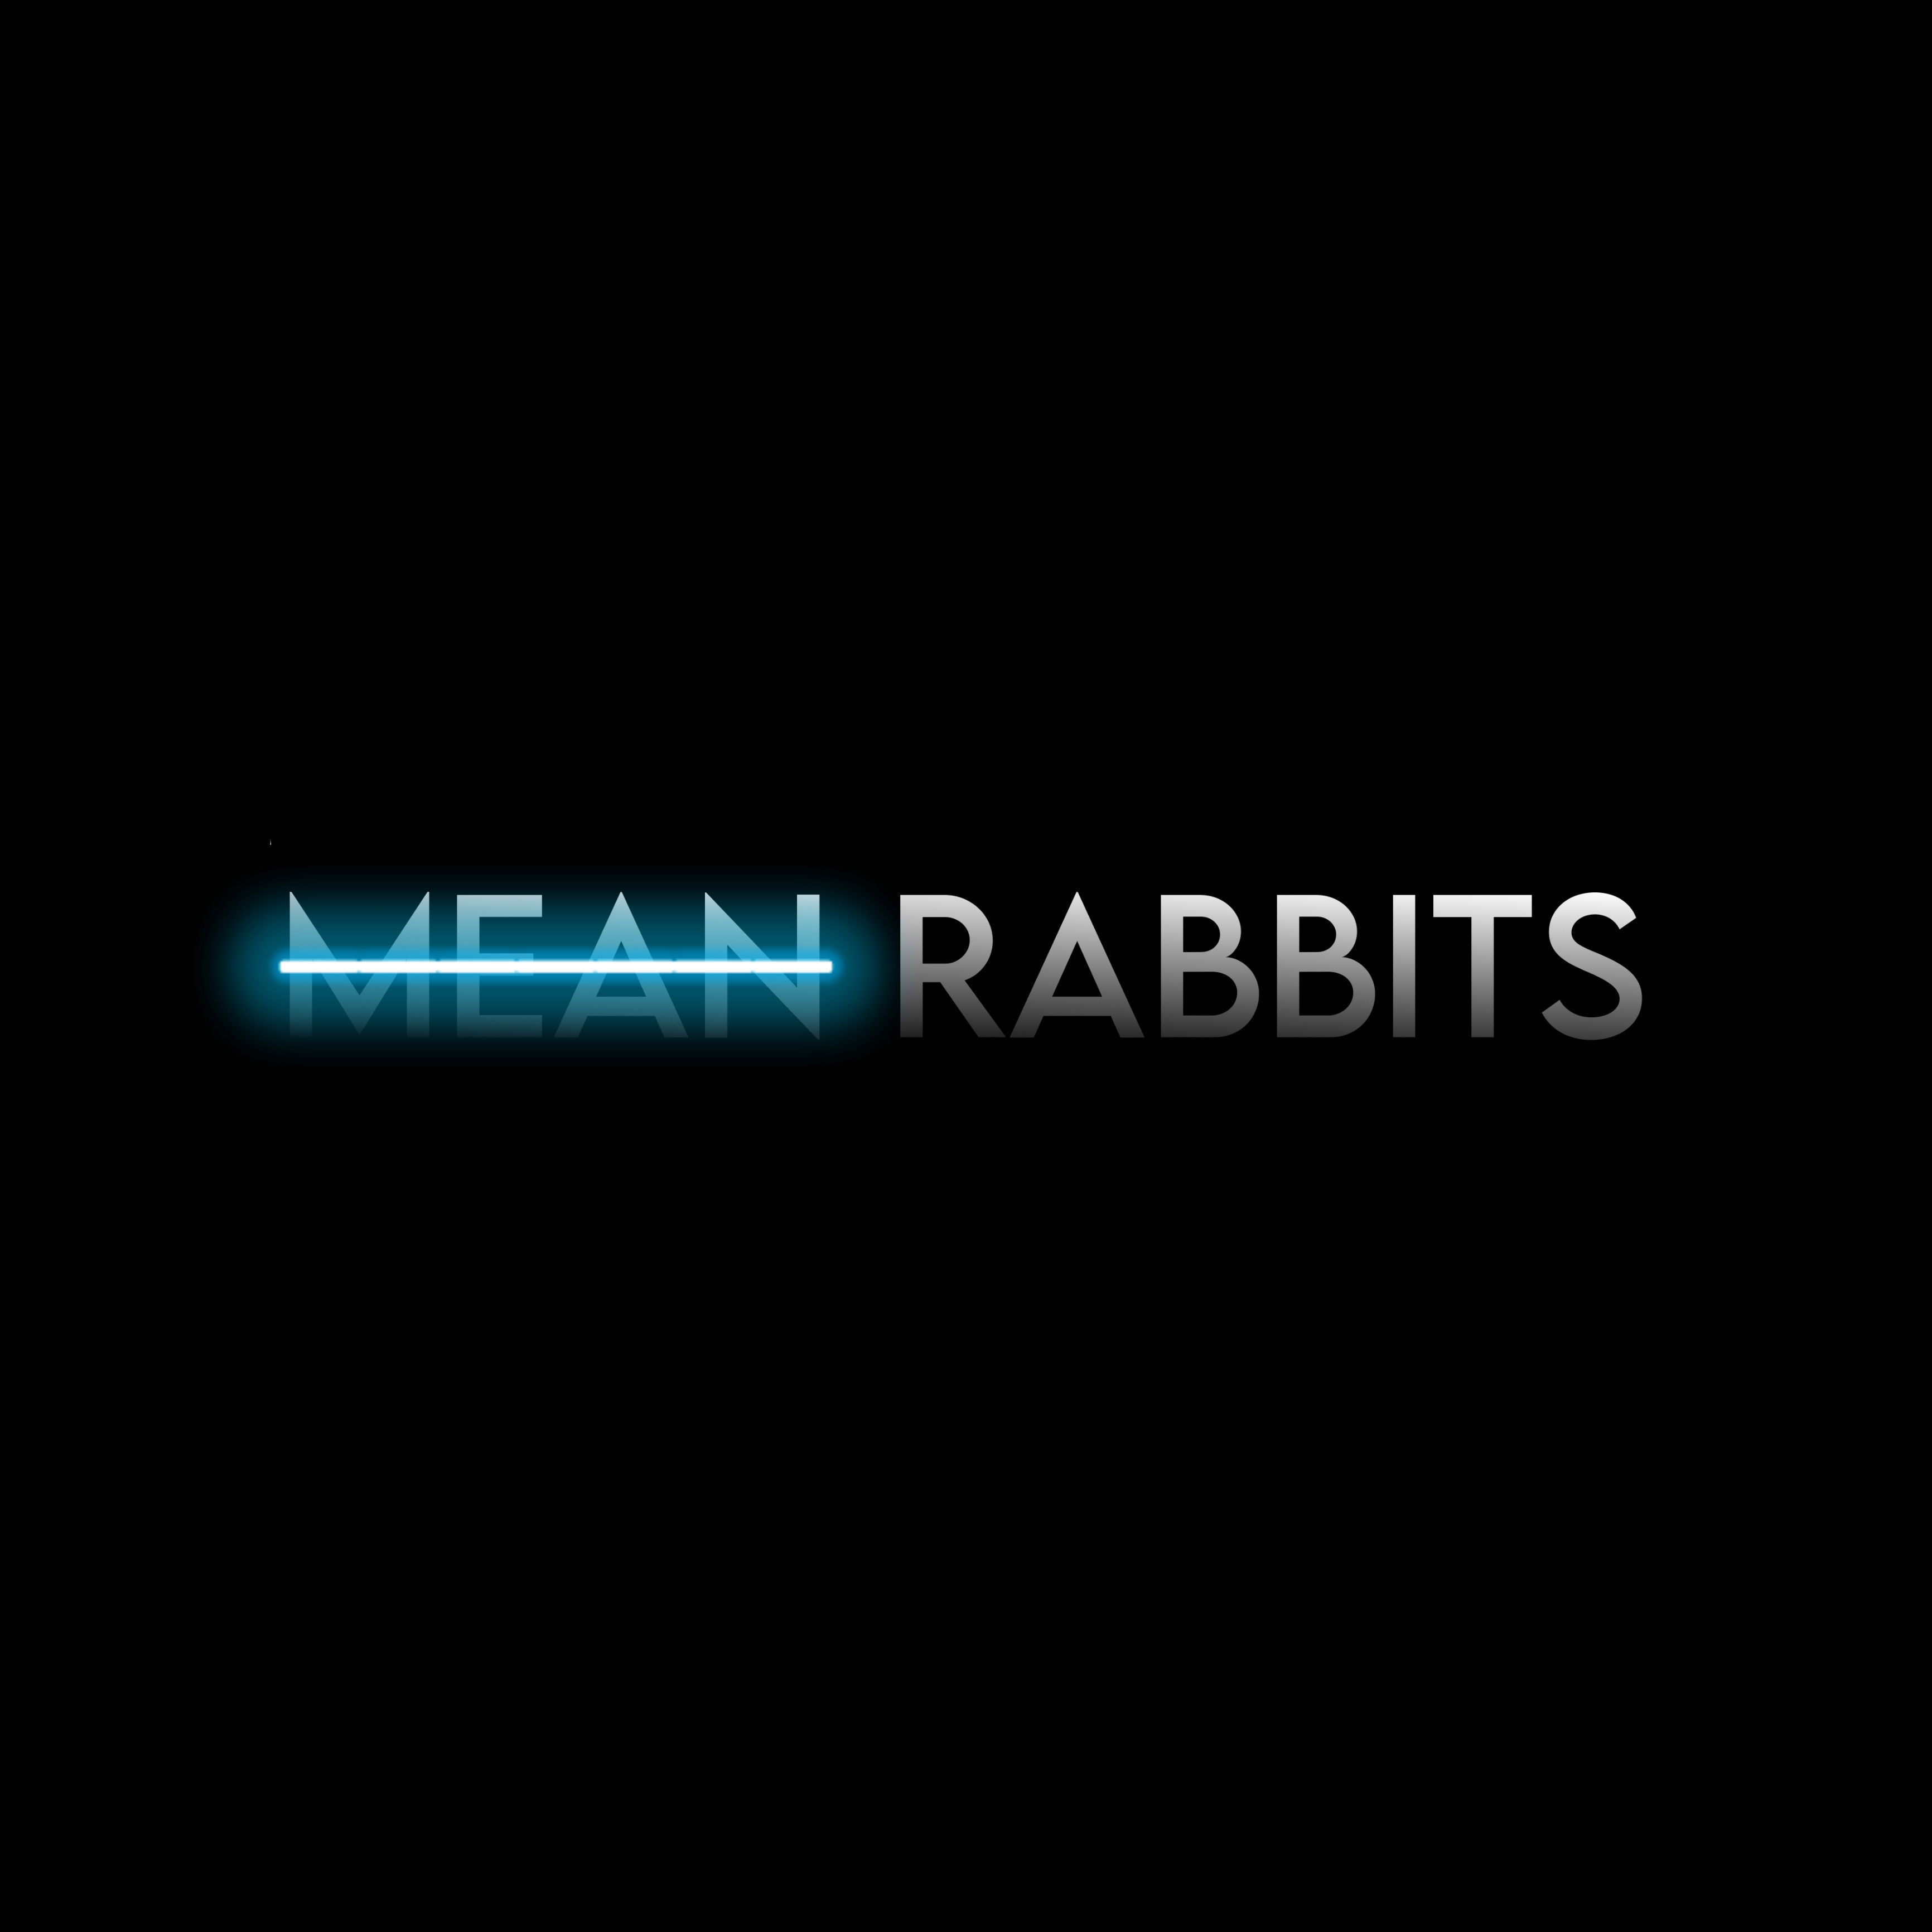 Mean Rabbits banner